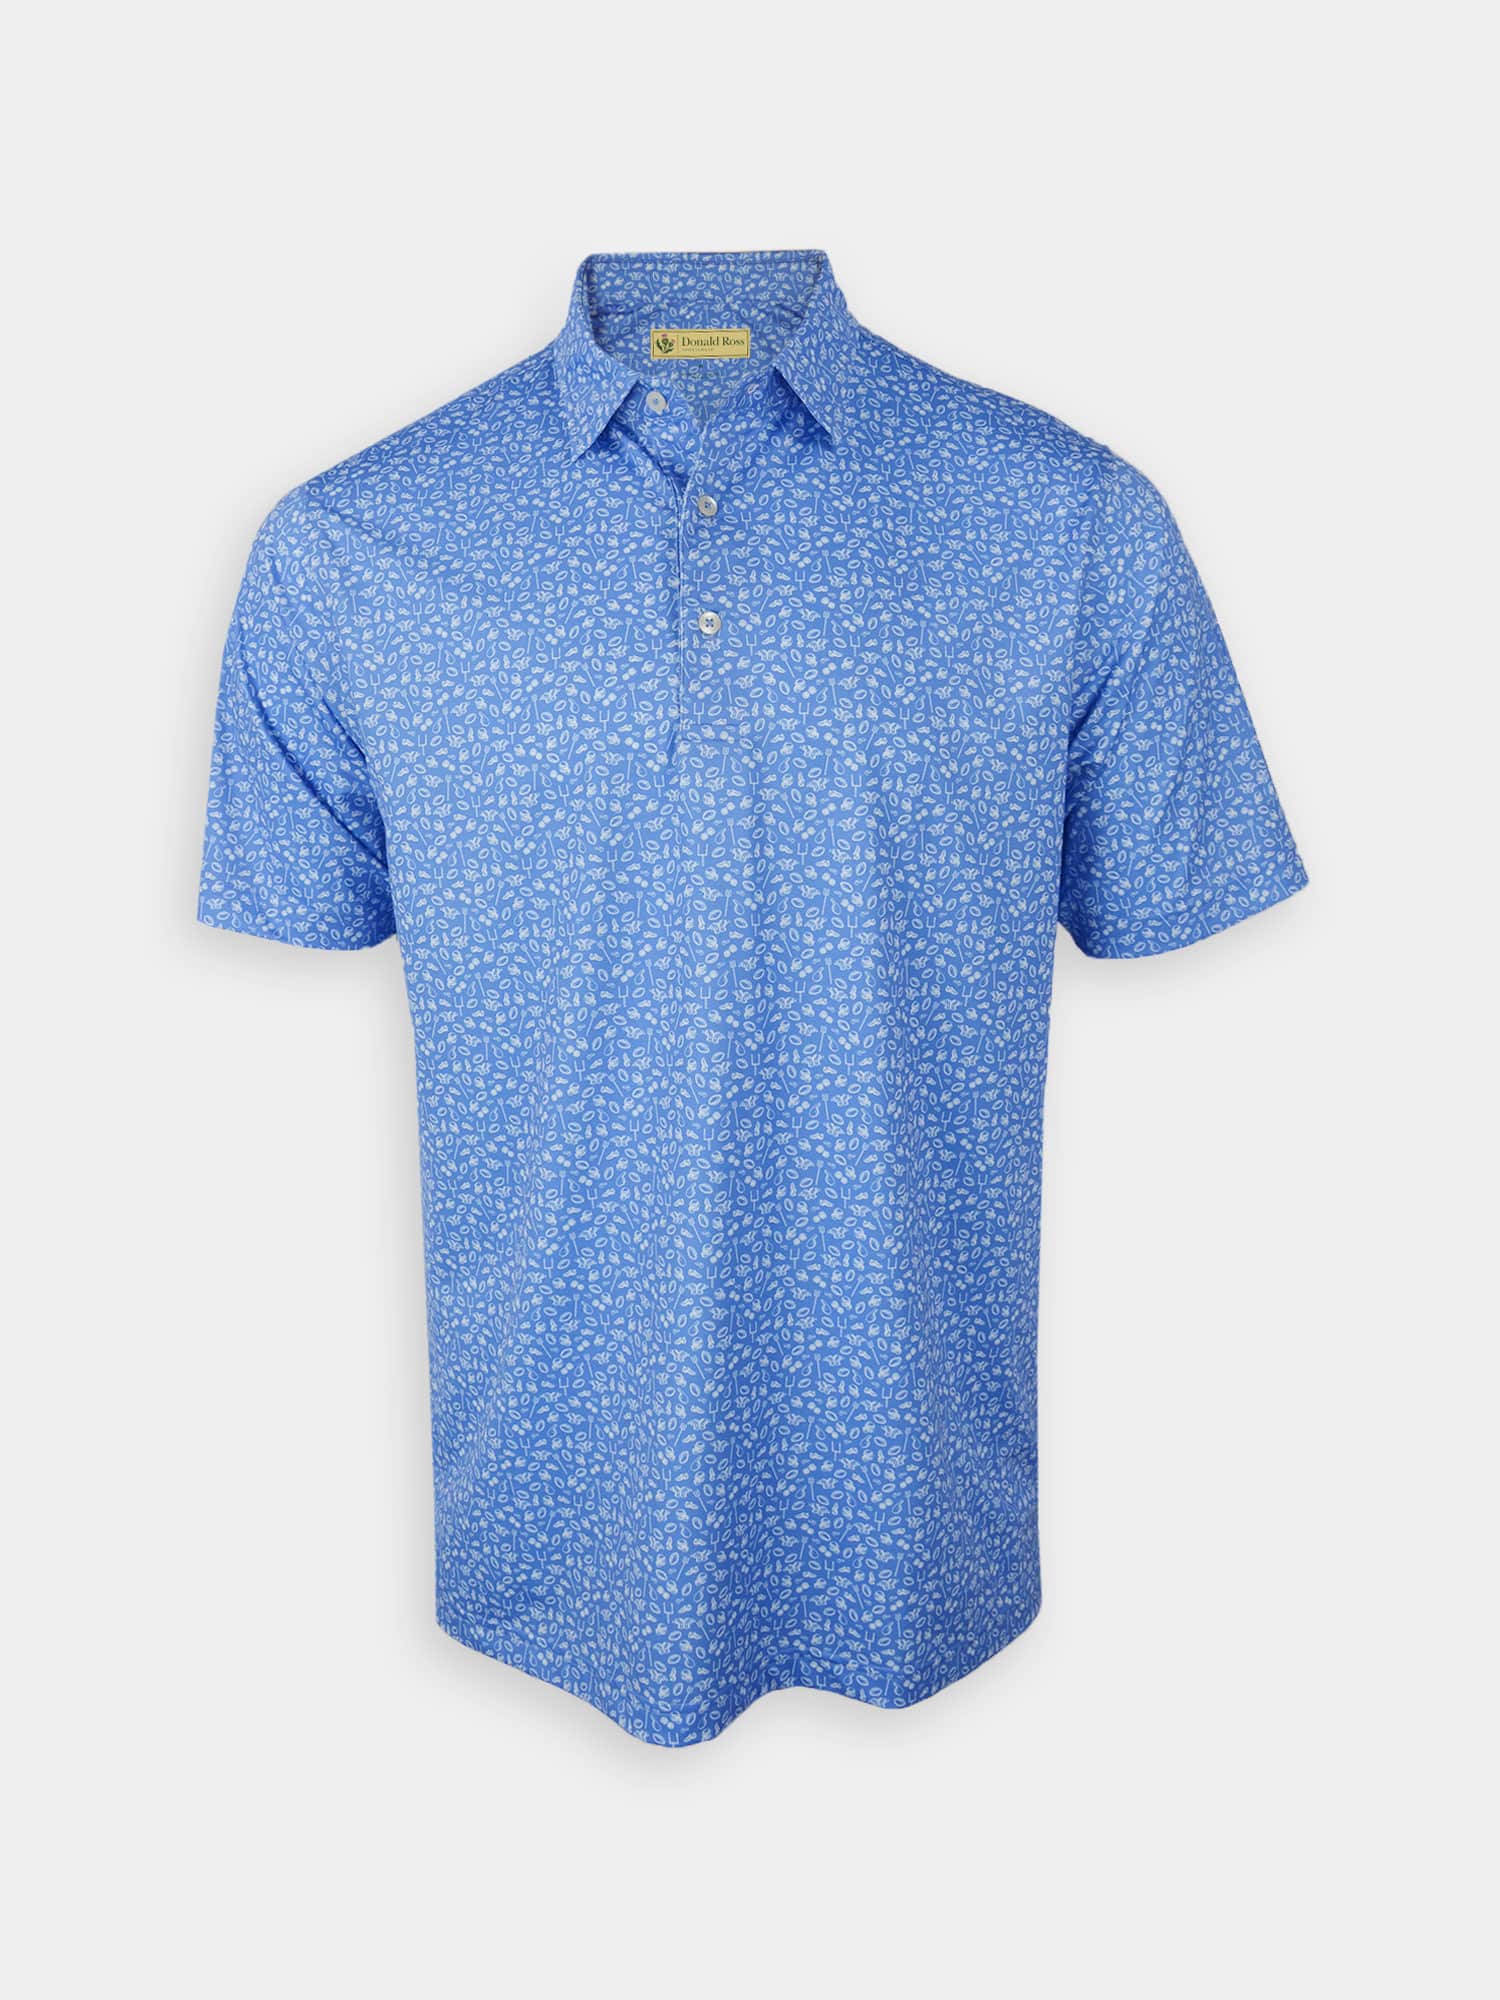 Men's Golf Polo - Football Collage- Donald Ross Sportswear